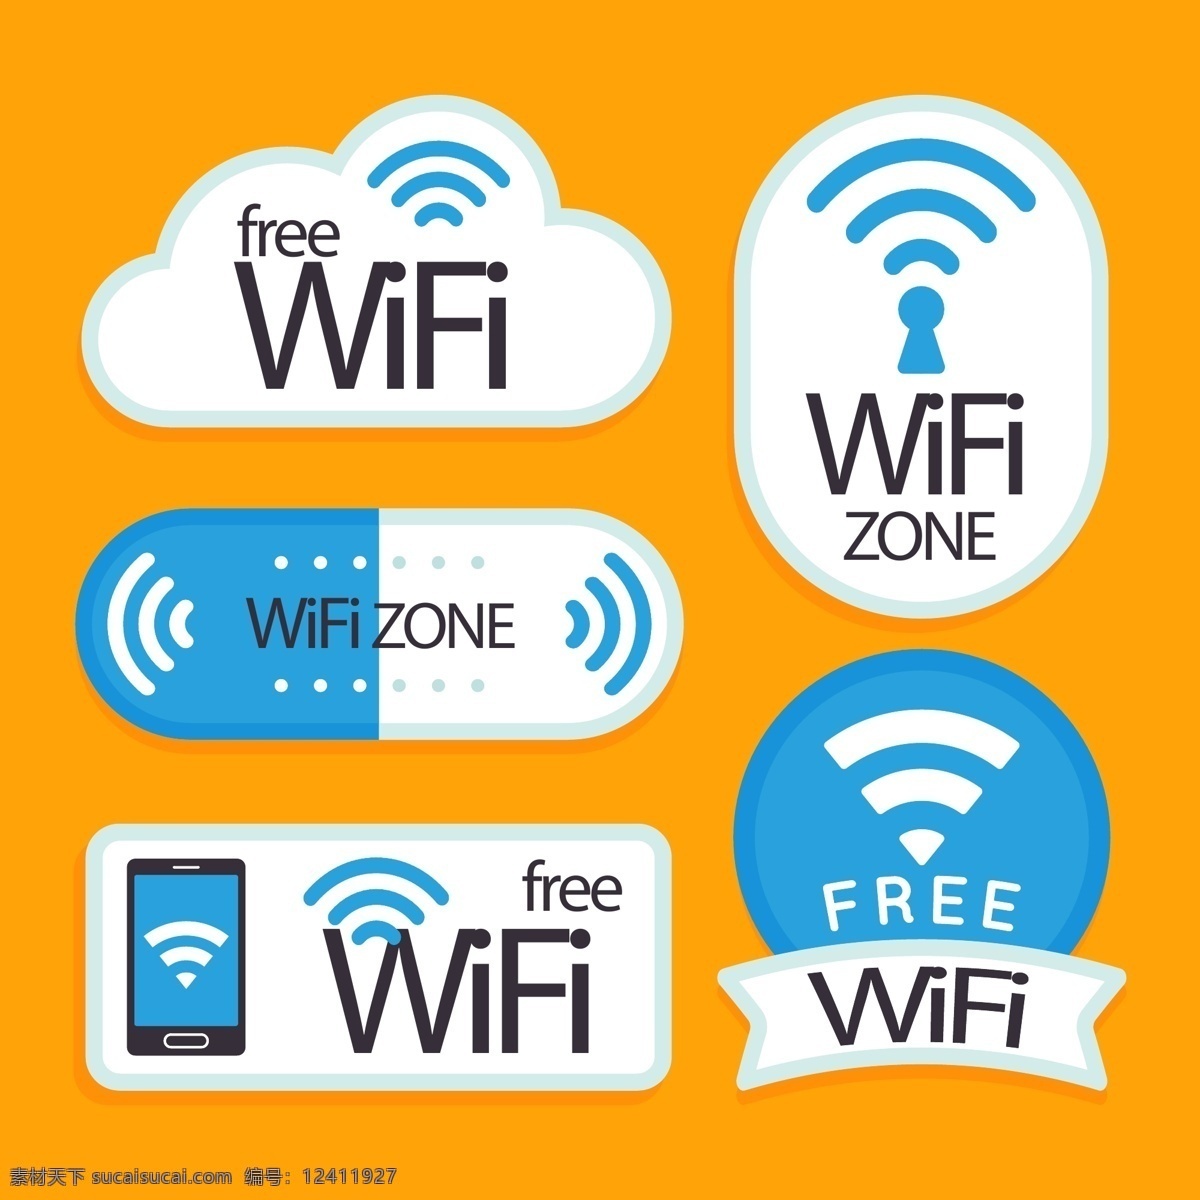 wifi 信号 共享 标识 网络信号 信号图 wifi图表 信号图标 路由器 共享wifi 图标 手机wifi 彩色 点赞 手势 集合 招贴设计